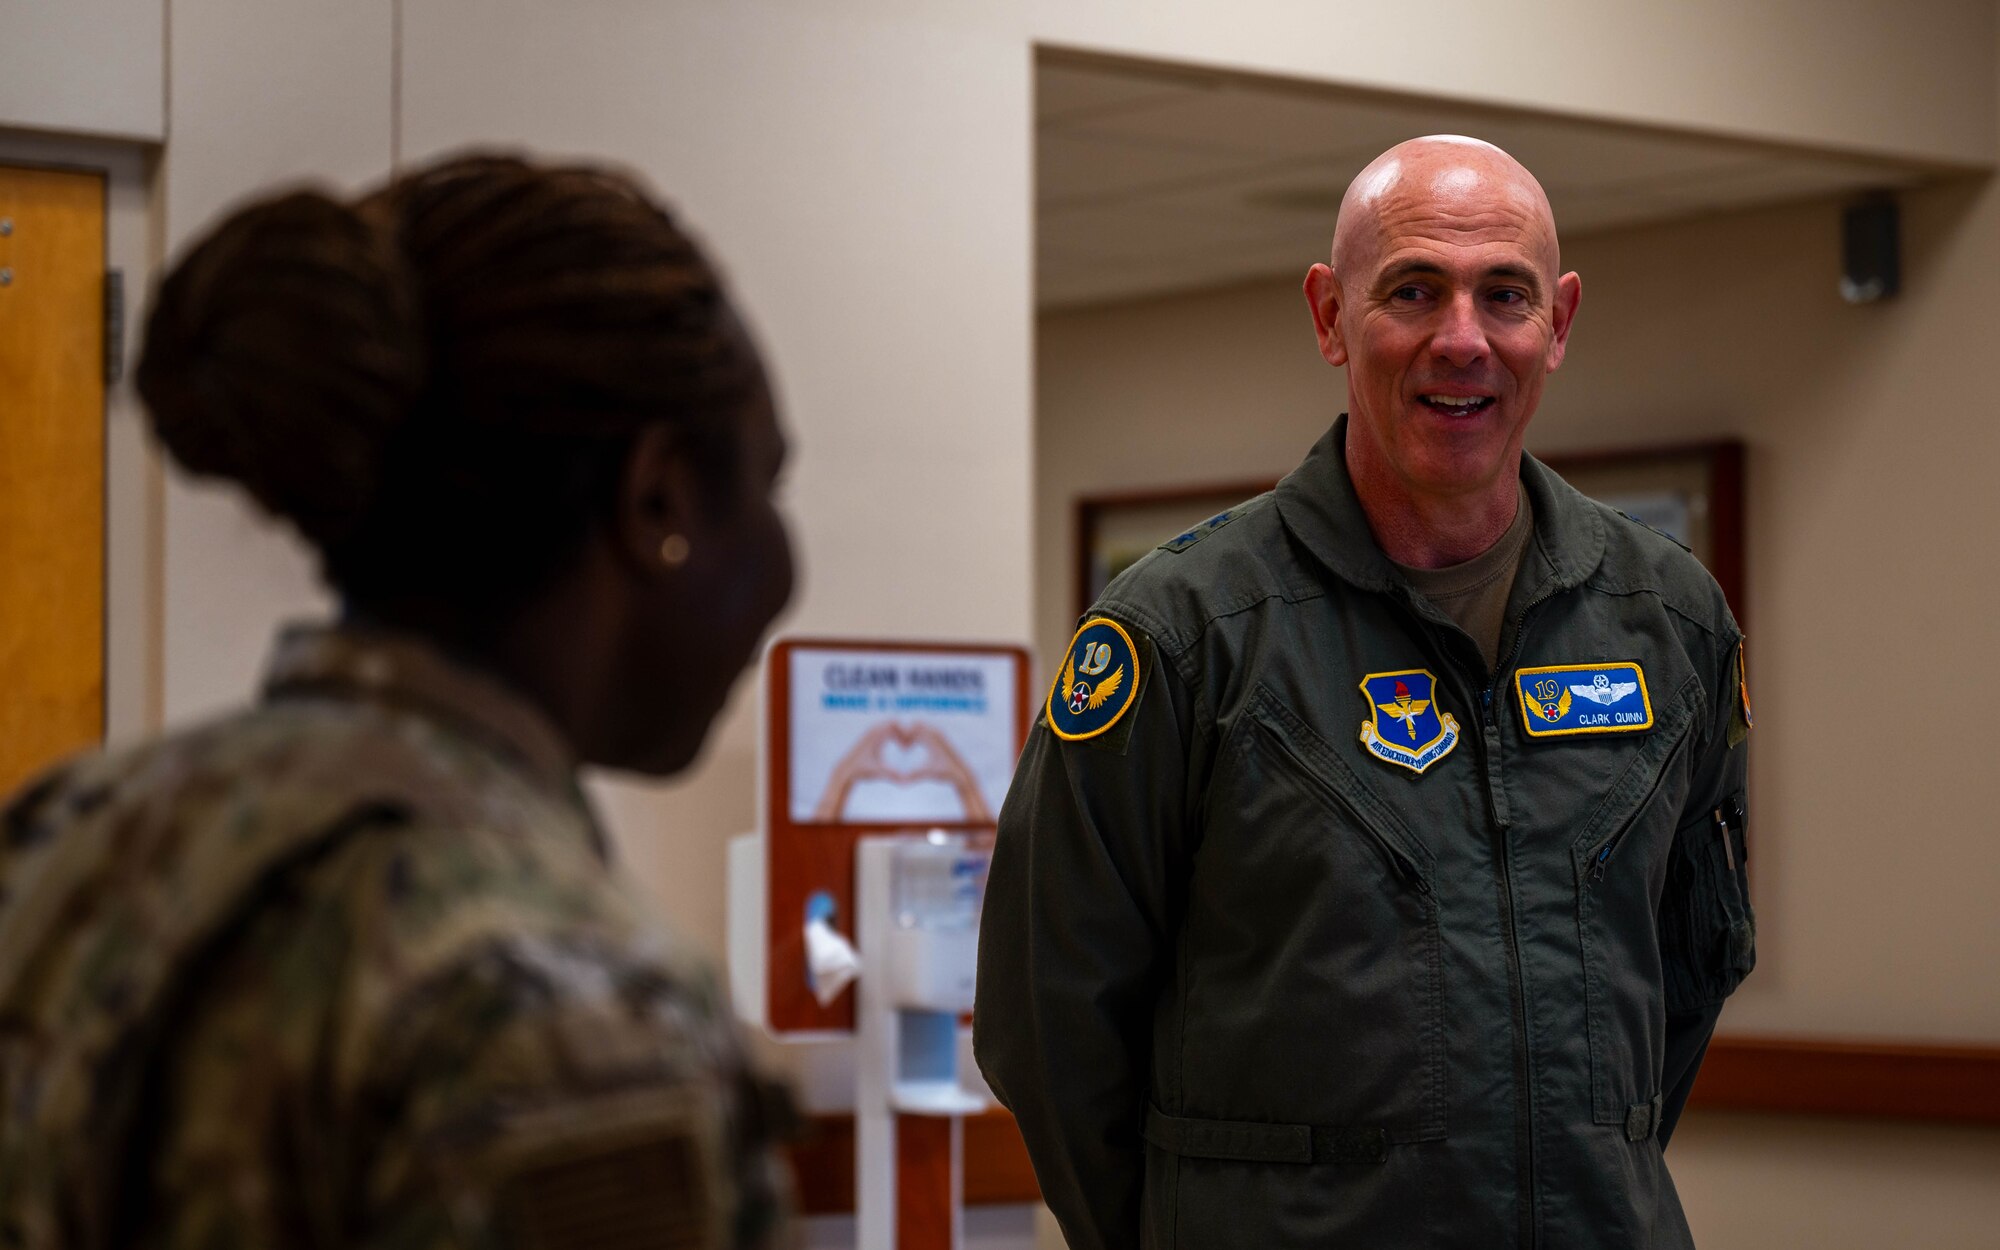 19th Air Force command team visits Luke AFB